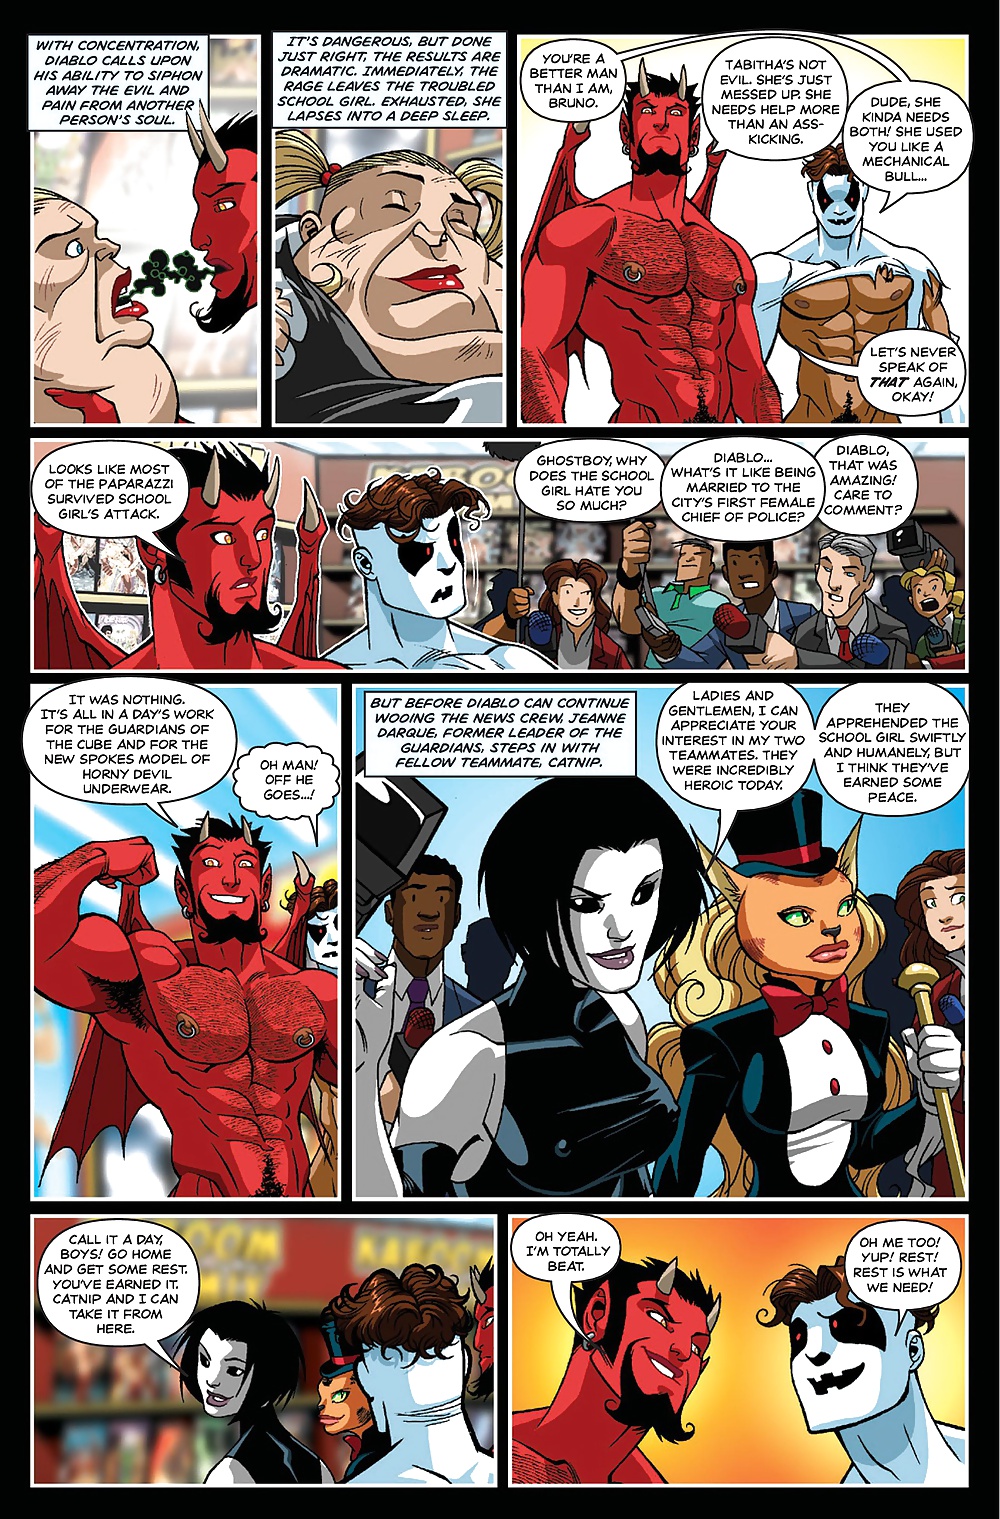 Ghostboy & Diablo 1 -- Class Comics #31430596